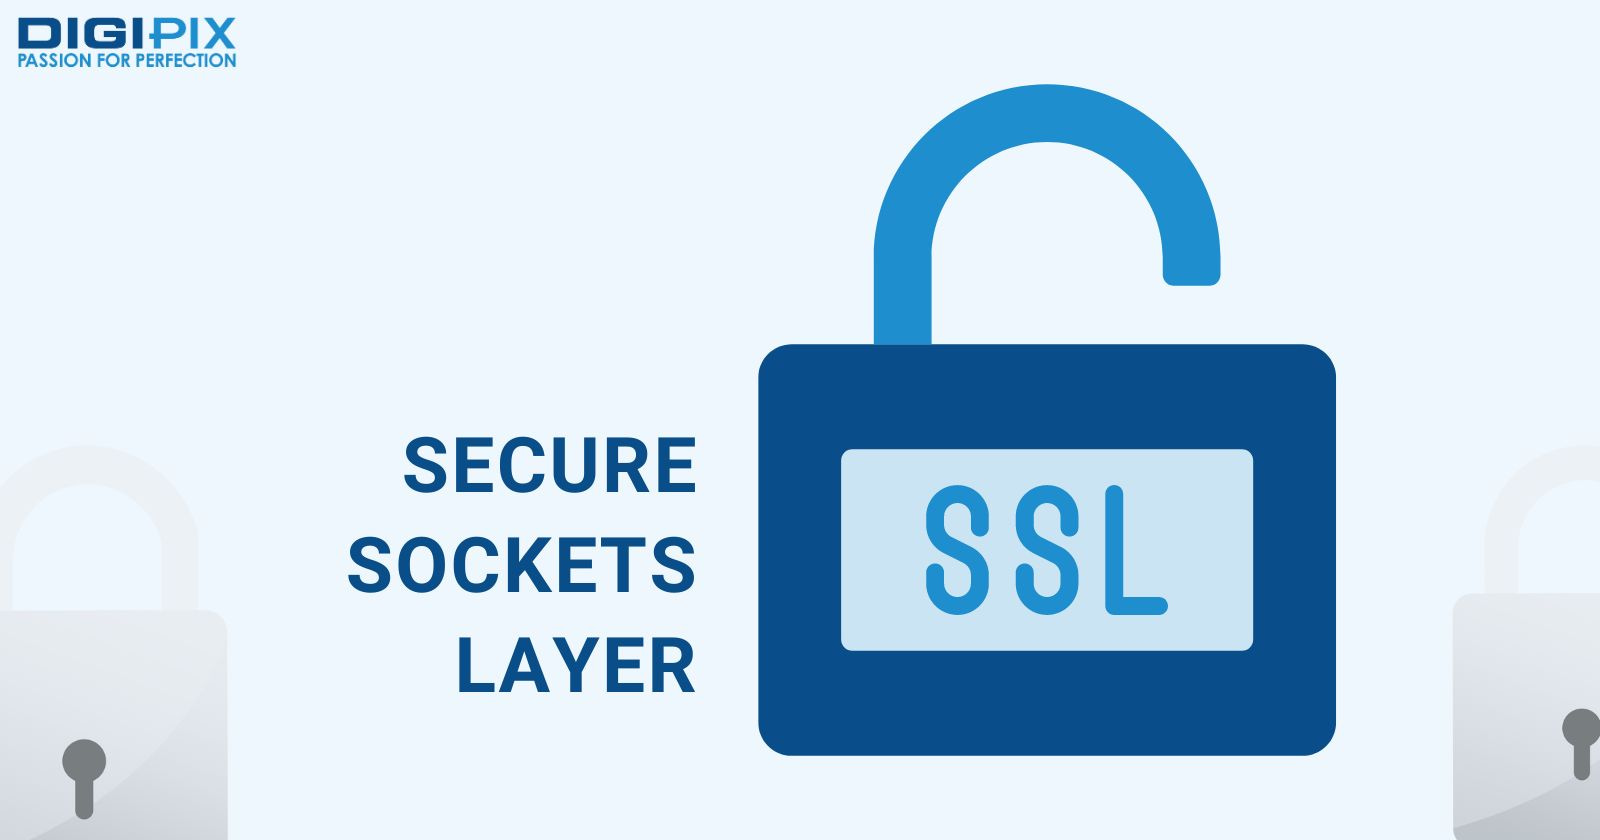 Secure Sockets Layer digipix digipixinc.com